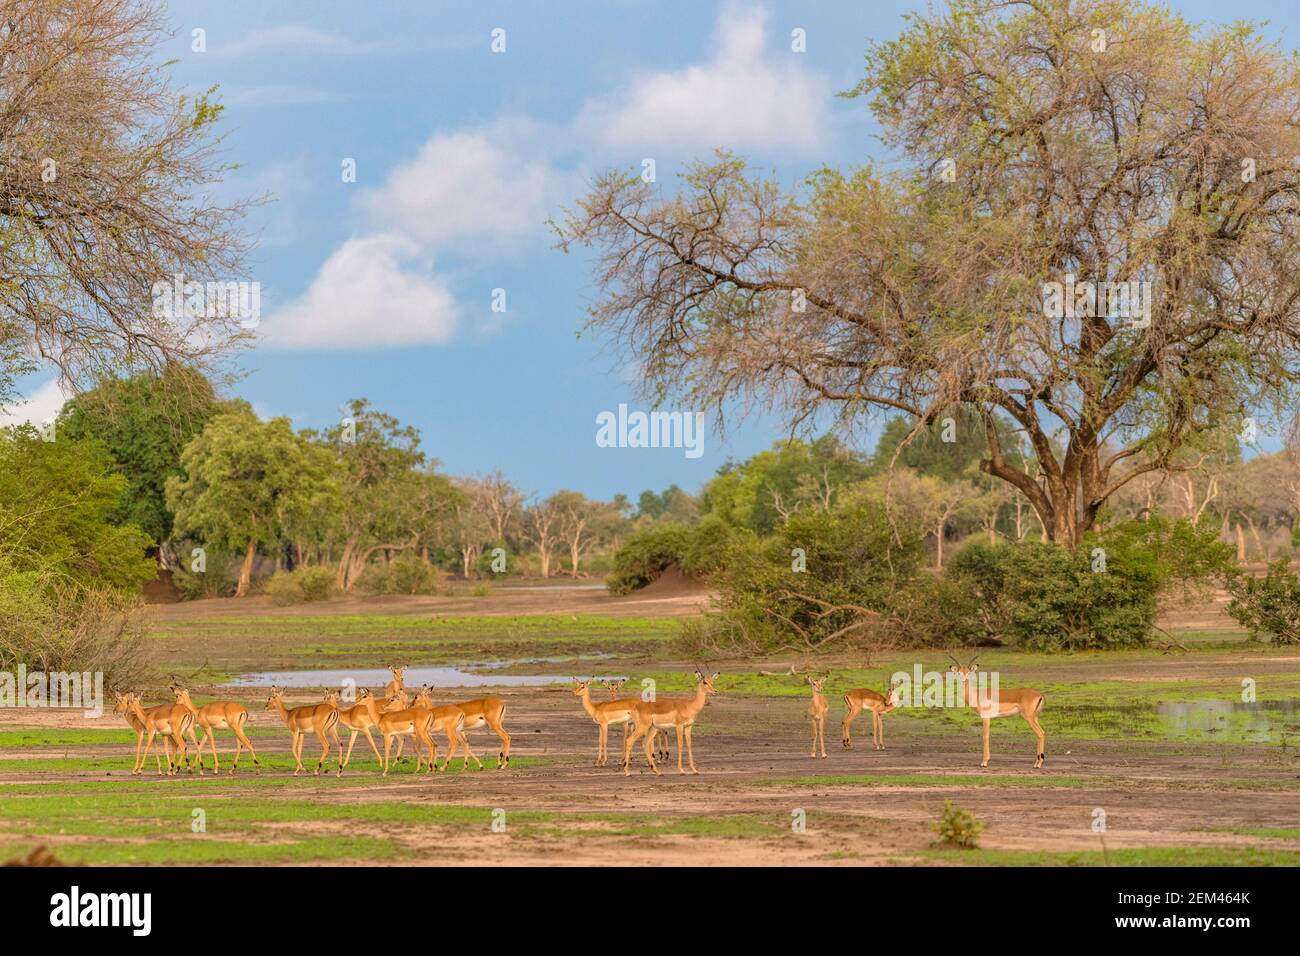 A herd of Impala, Aepyceros melampus, seen in Zimbabwe's Mana Pools National Park in the wet season. Stock Photo